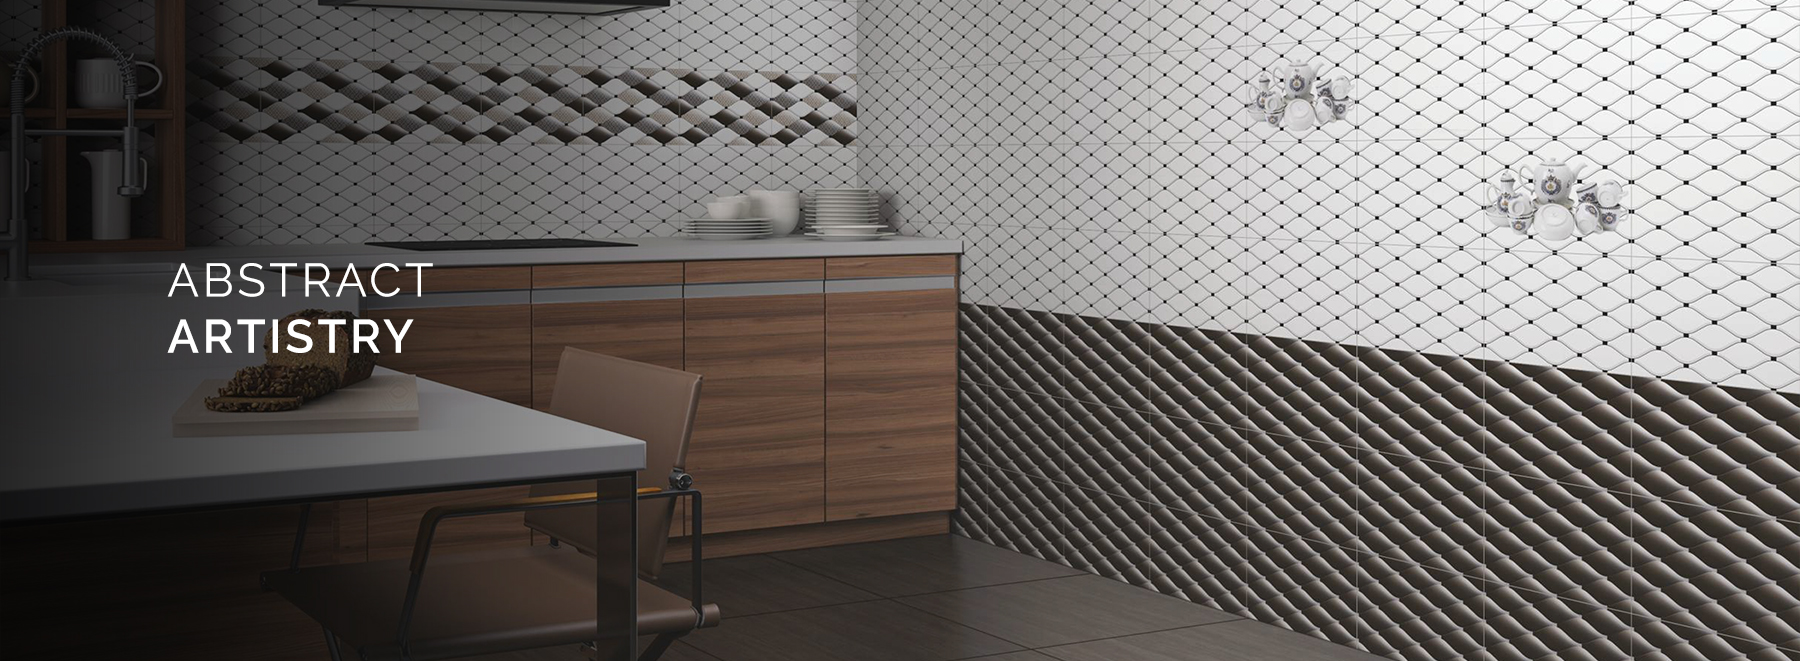 somany kitchen wall tiles